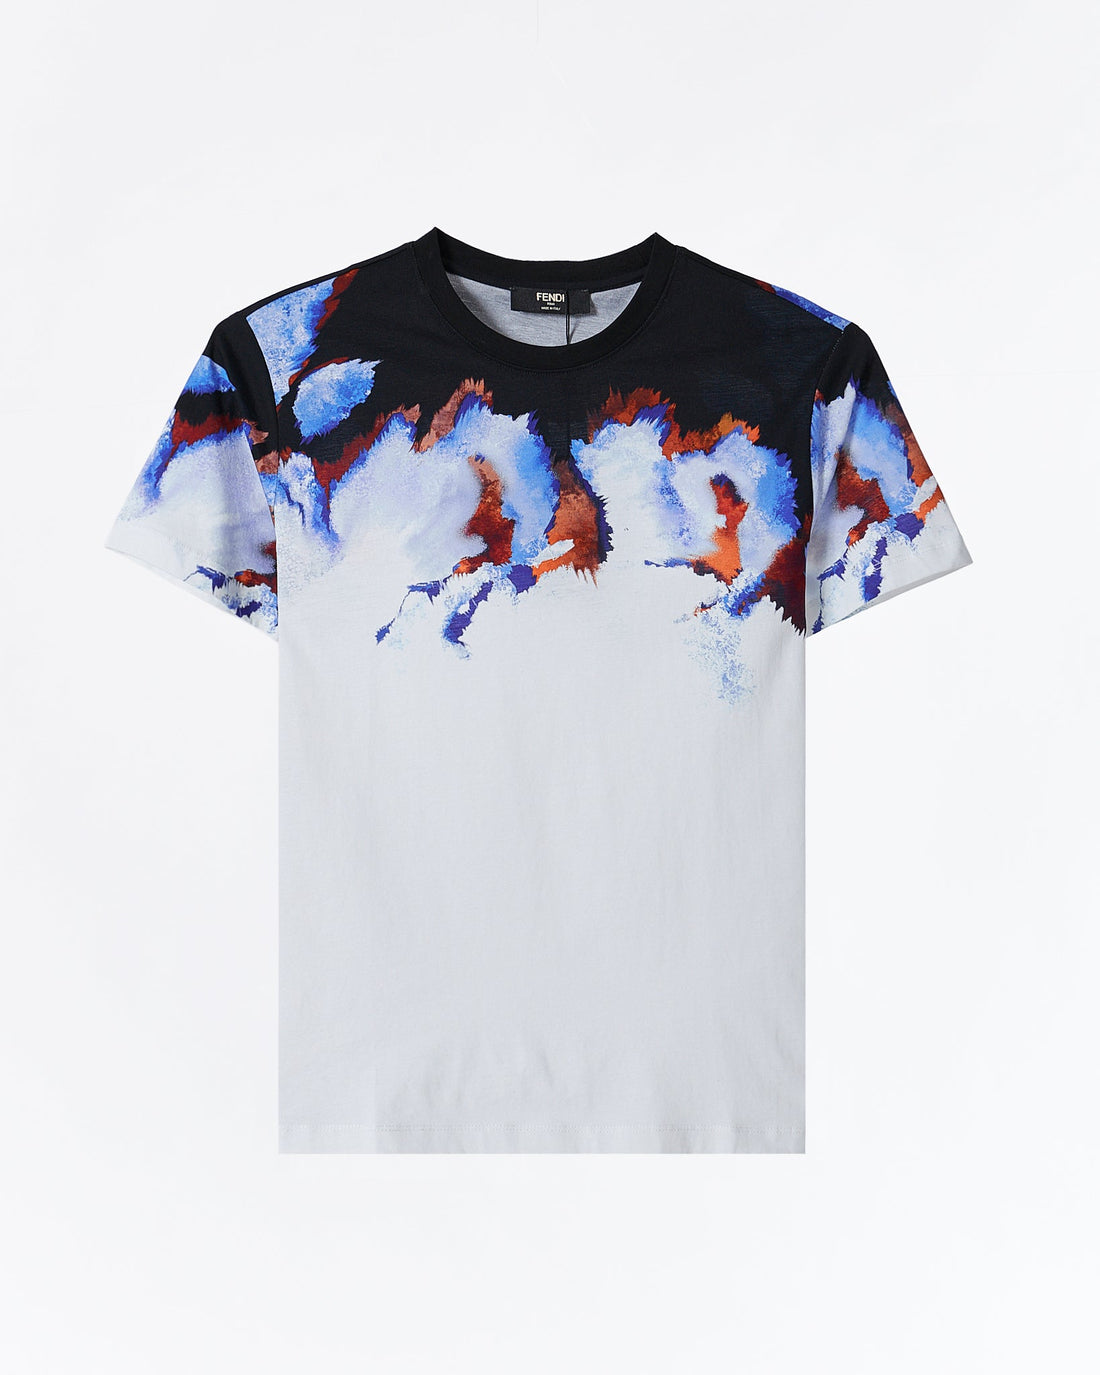 MOI OUTFIT-FF Gradient Color Printed Men T-Shirt 54.90